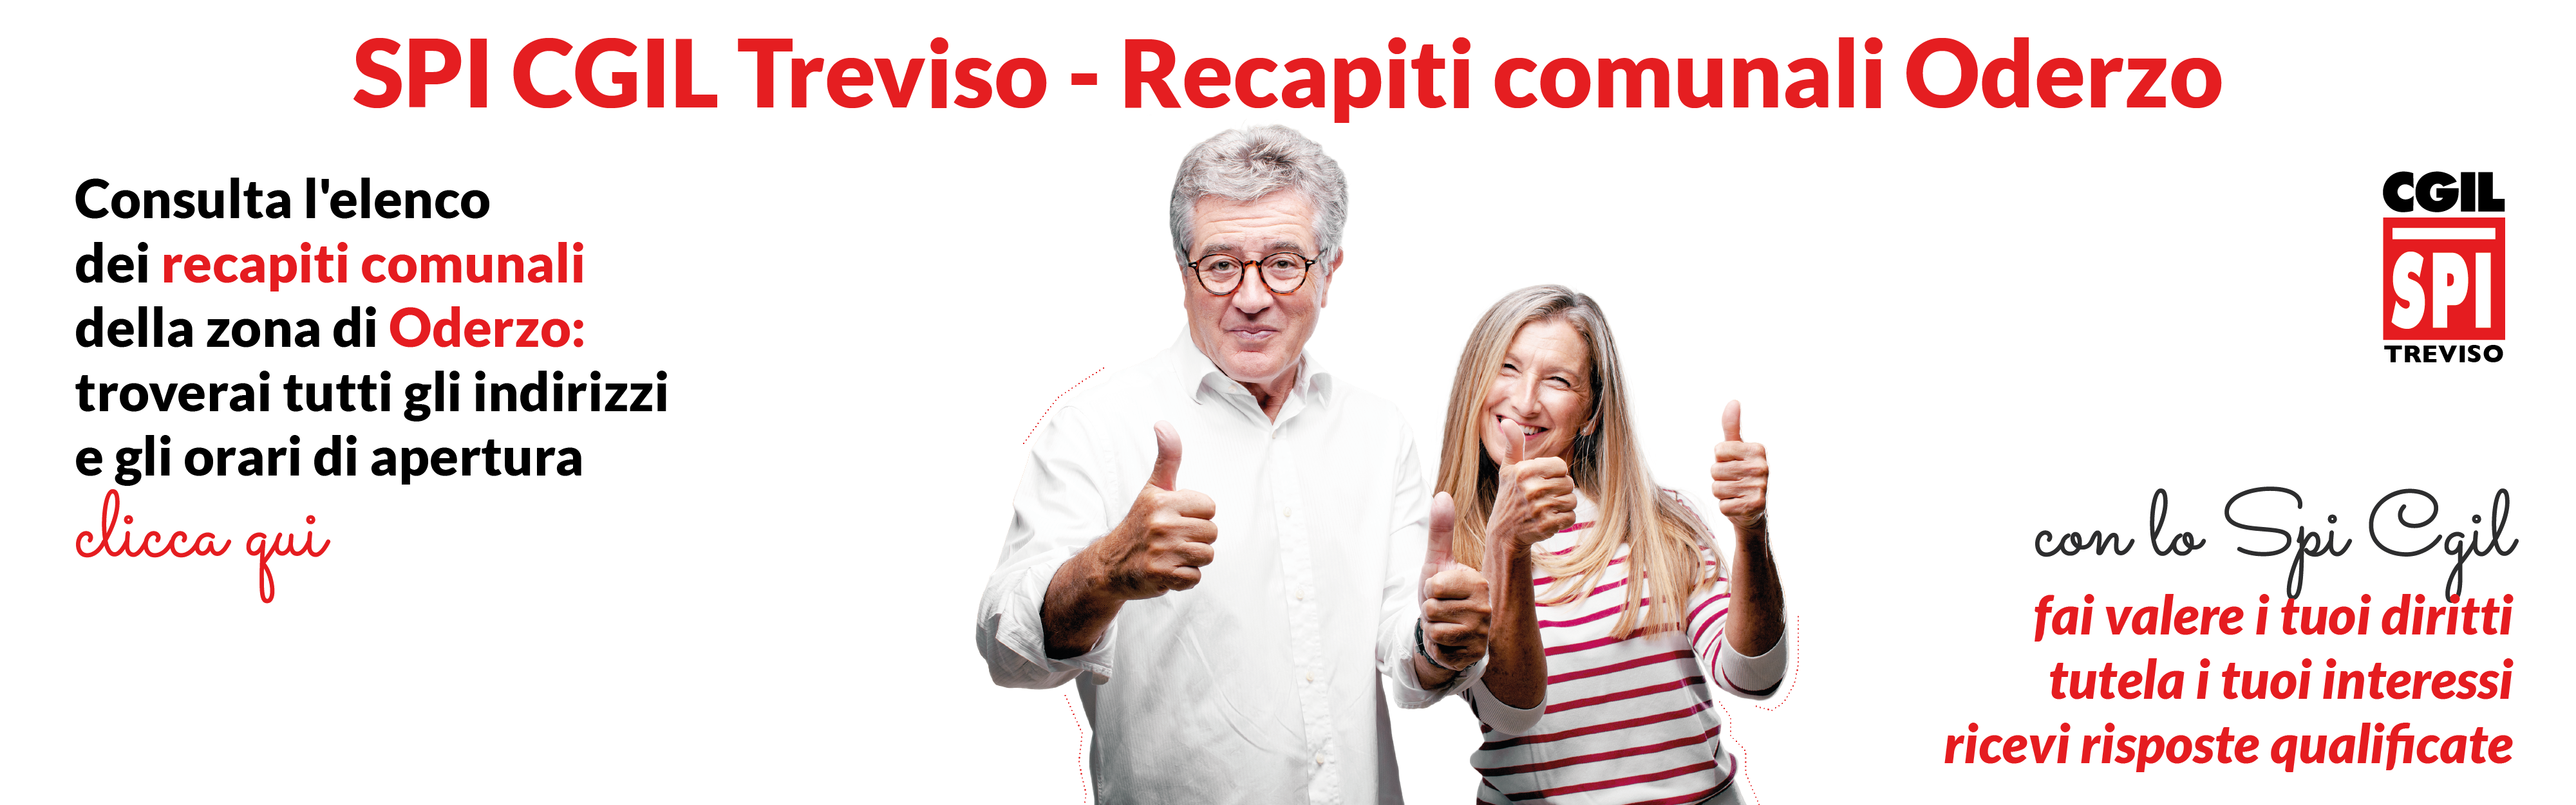 SPI CGIL TV-Recapiti Oderzo-banner